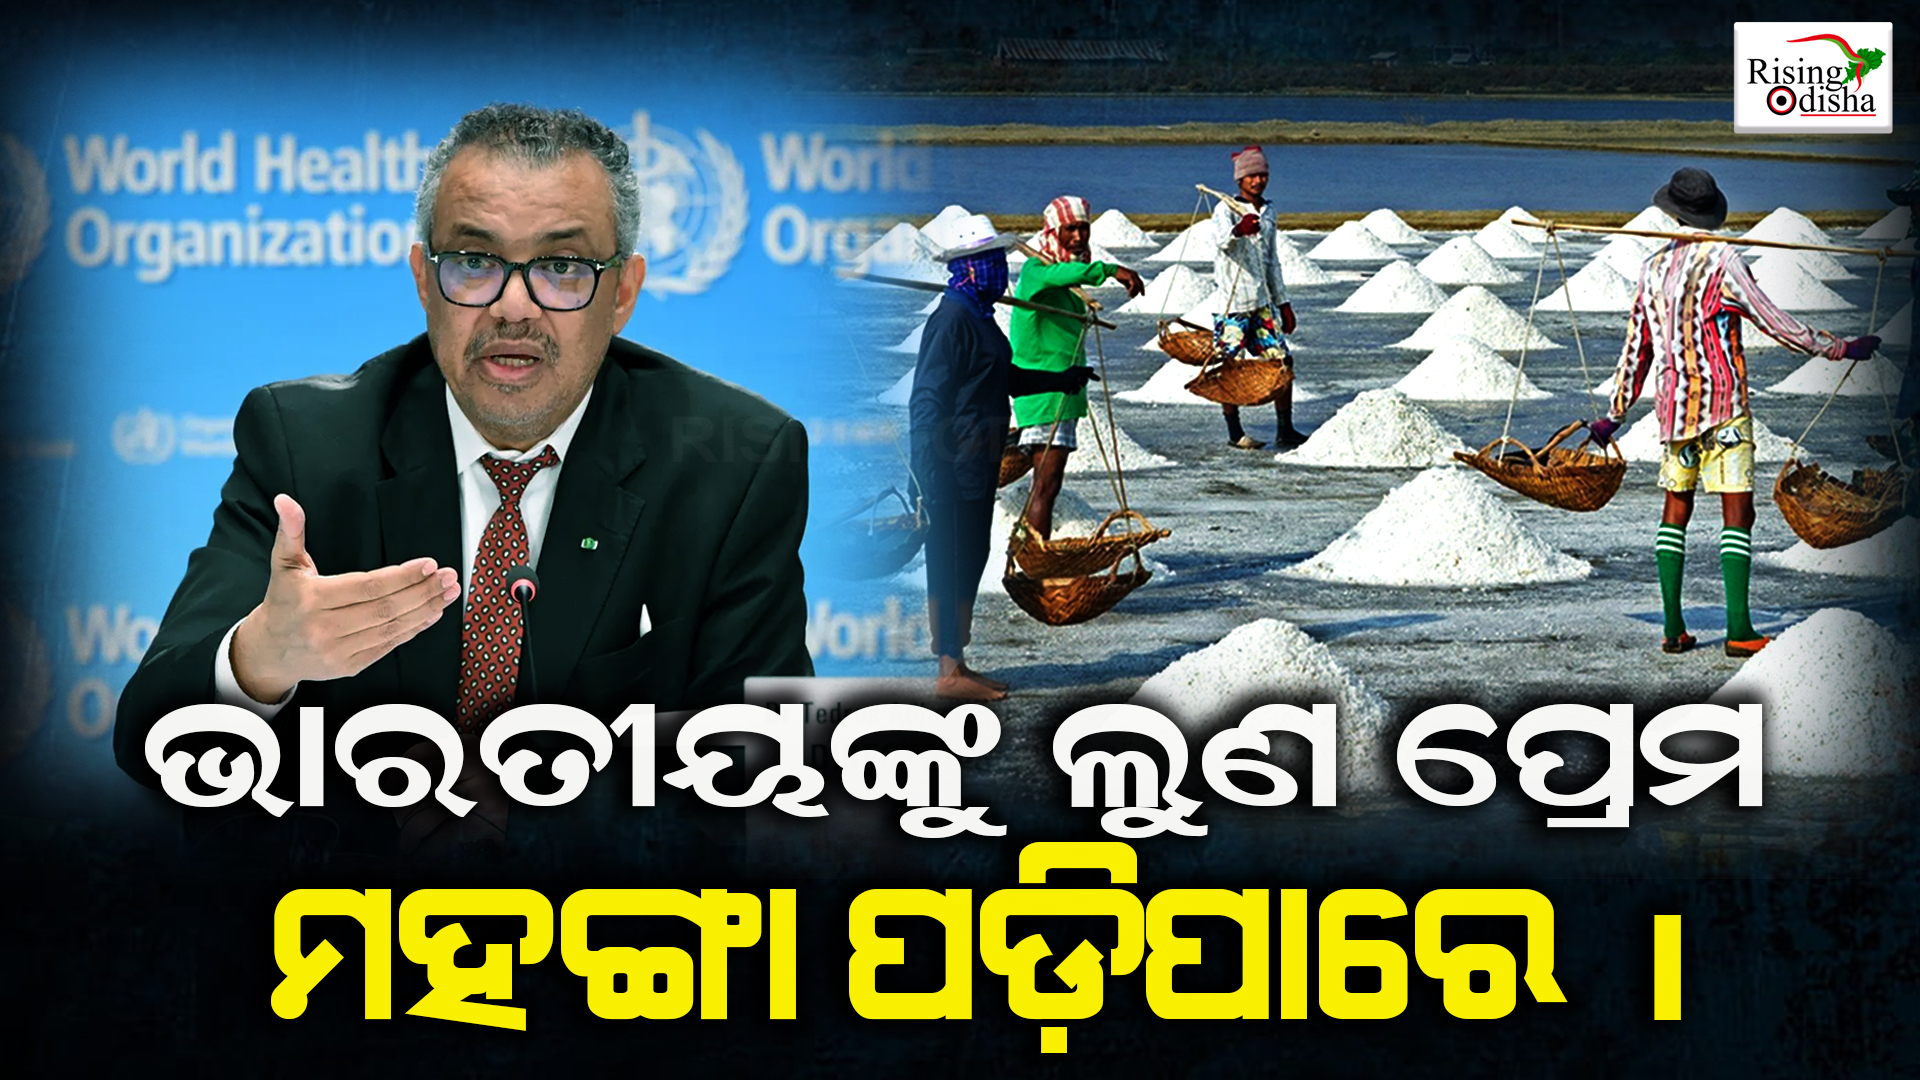 indian salt factory, salt effect on body, world health organization,odia blog, rising odisha